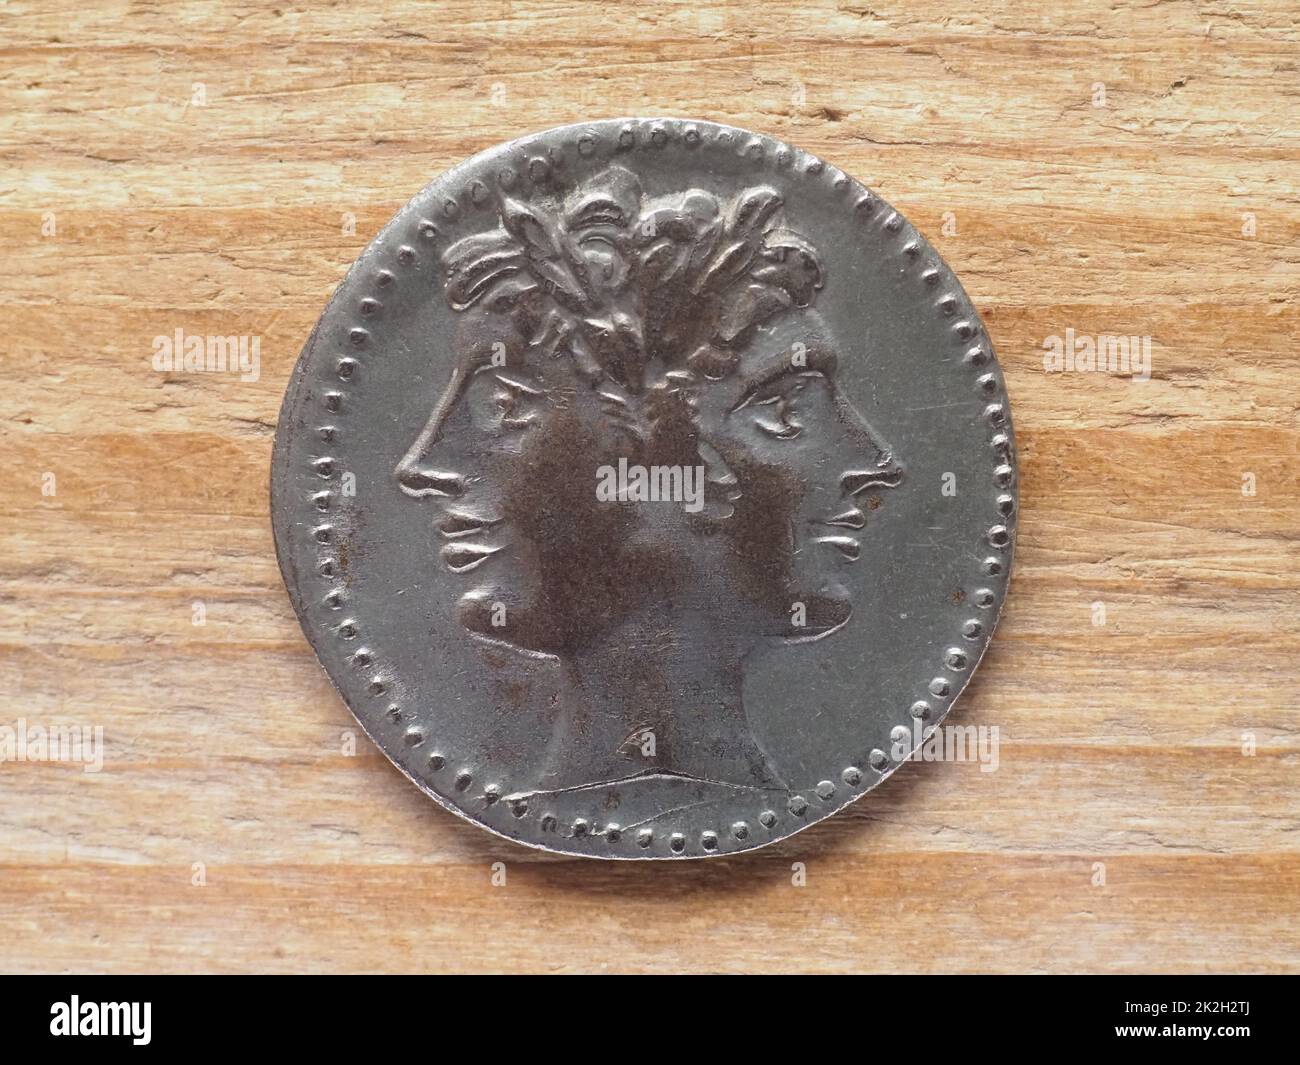 Ancient Roman didrachm coin obverse showing Janus circa 269 bC Stock Photo